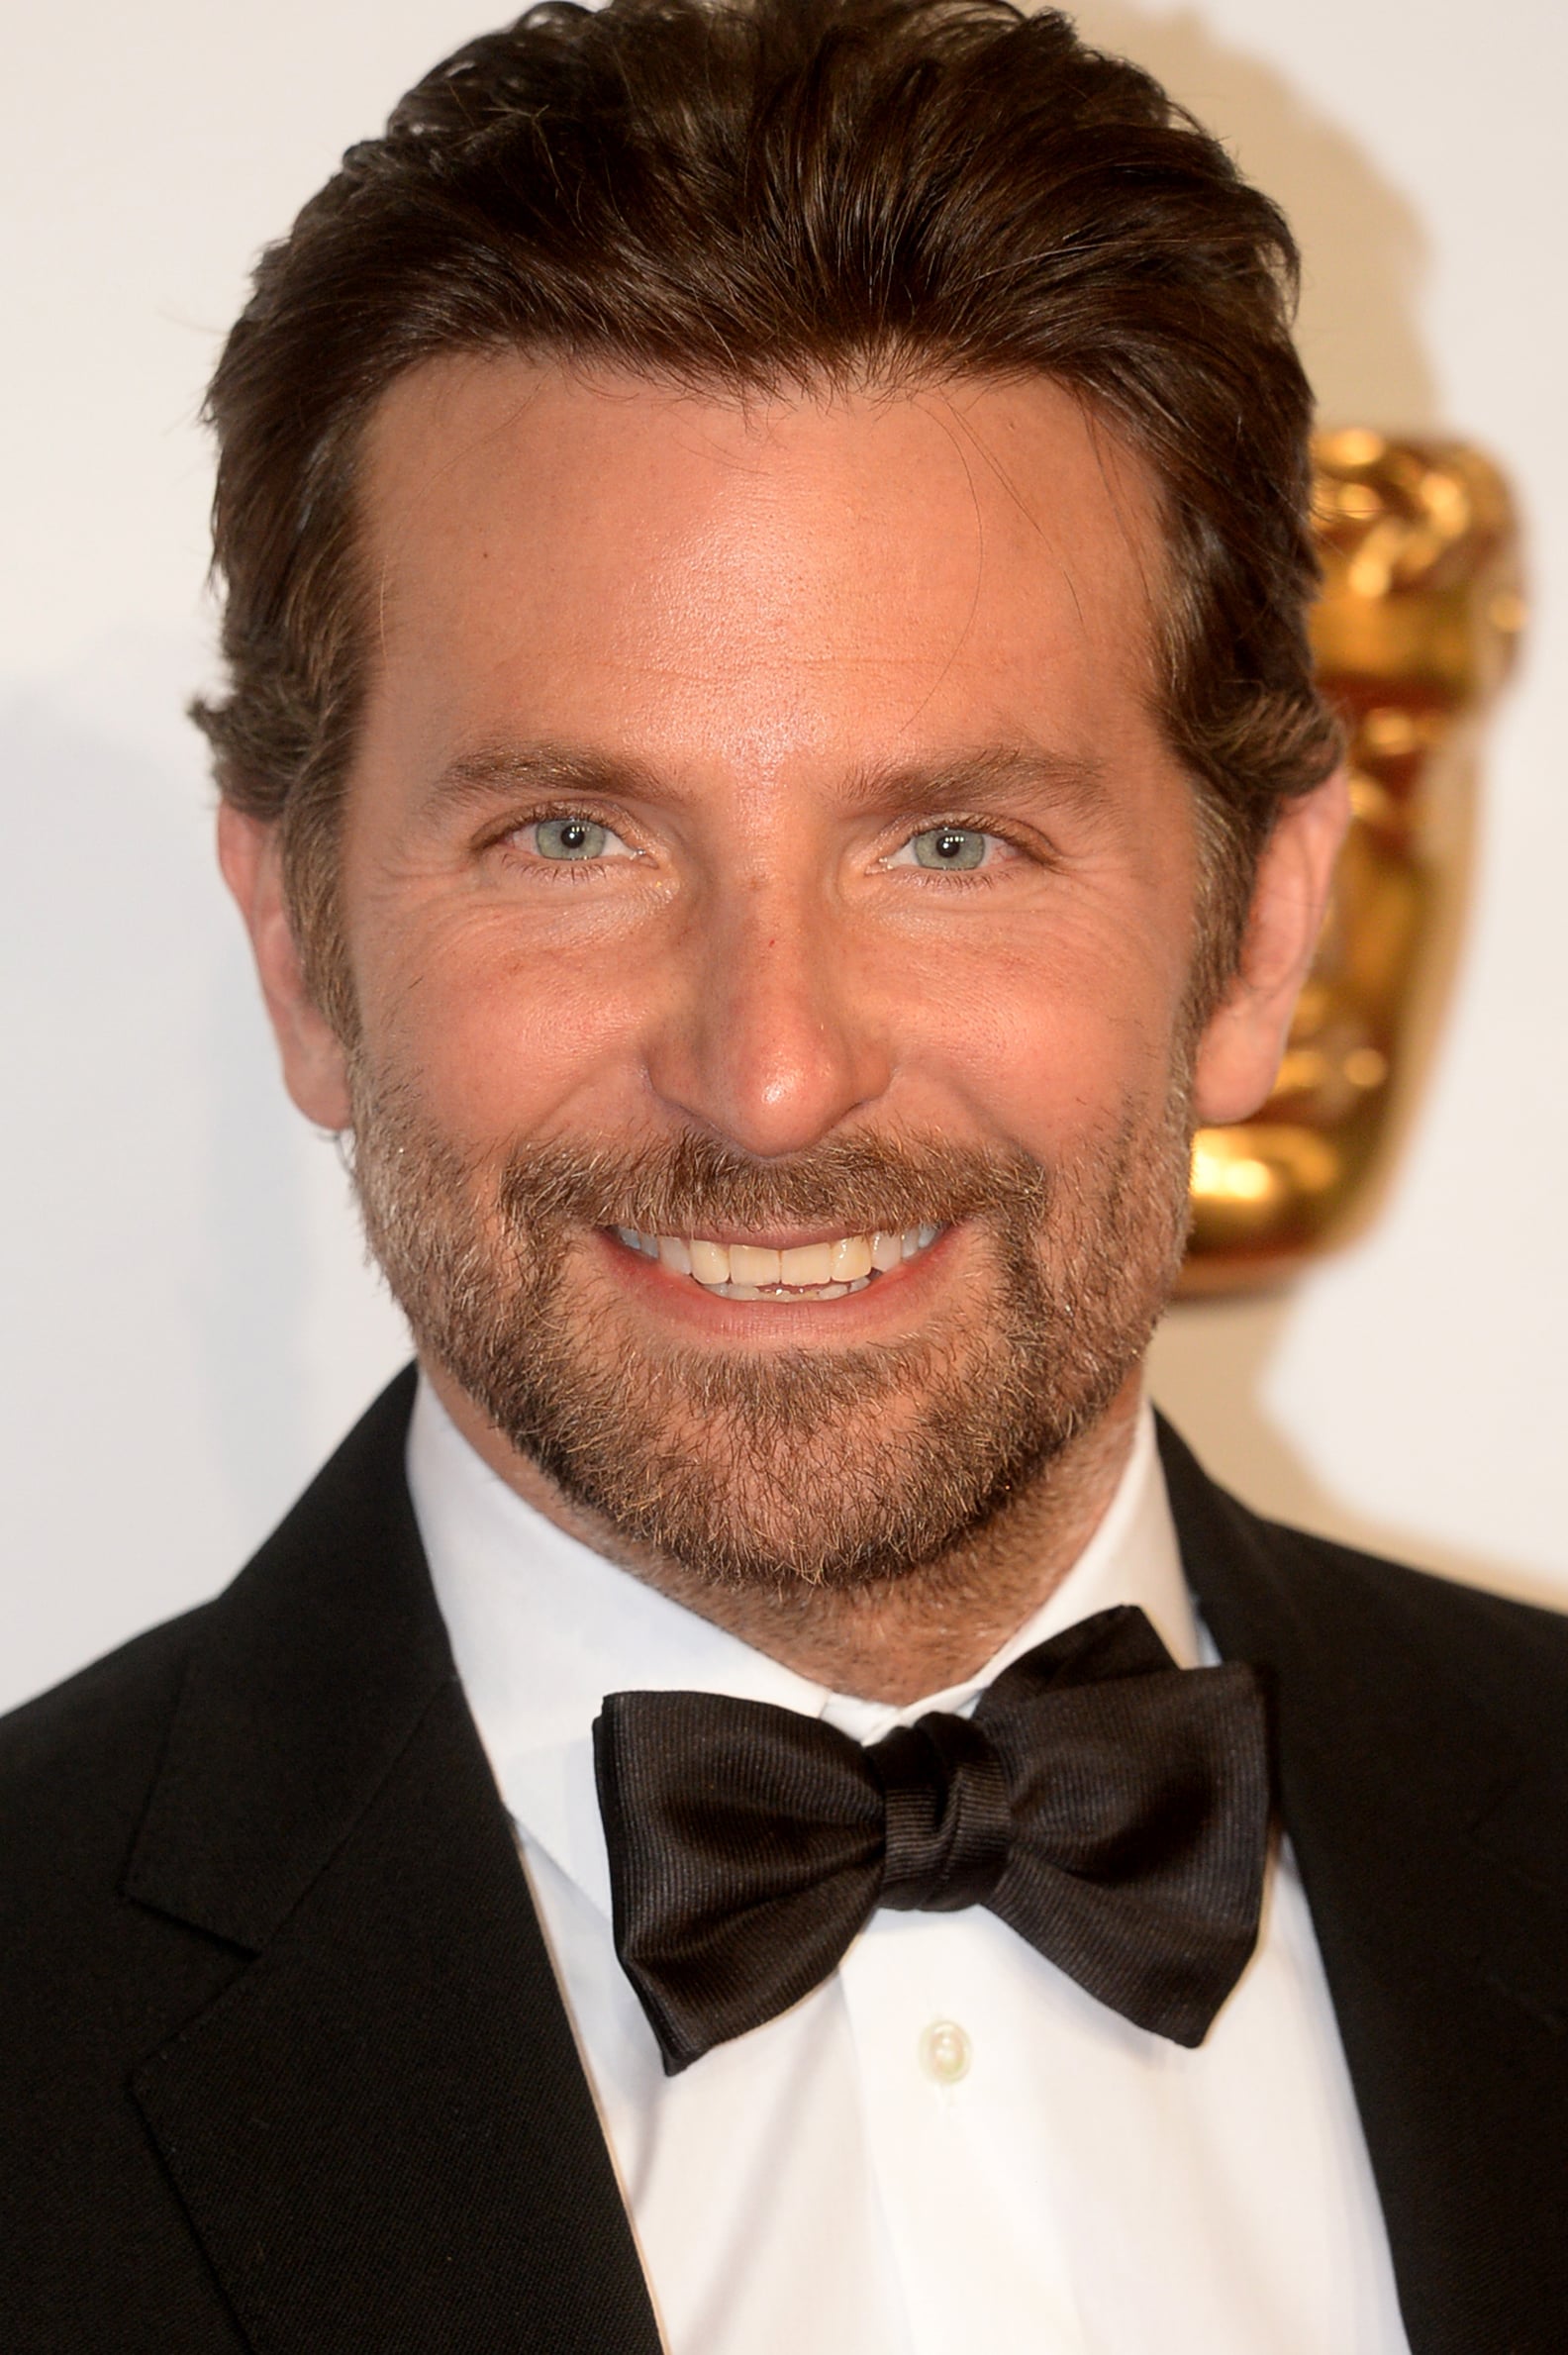 Bradley Cooper at the BAFTA Awards 2019 | POPSUGAR Celebrity